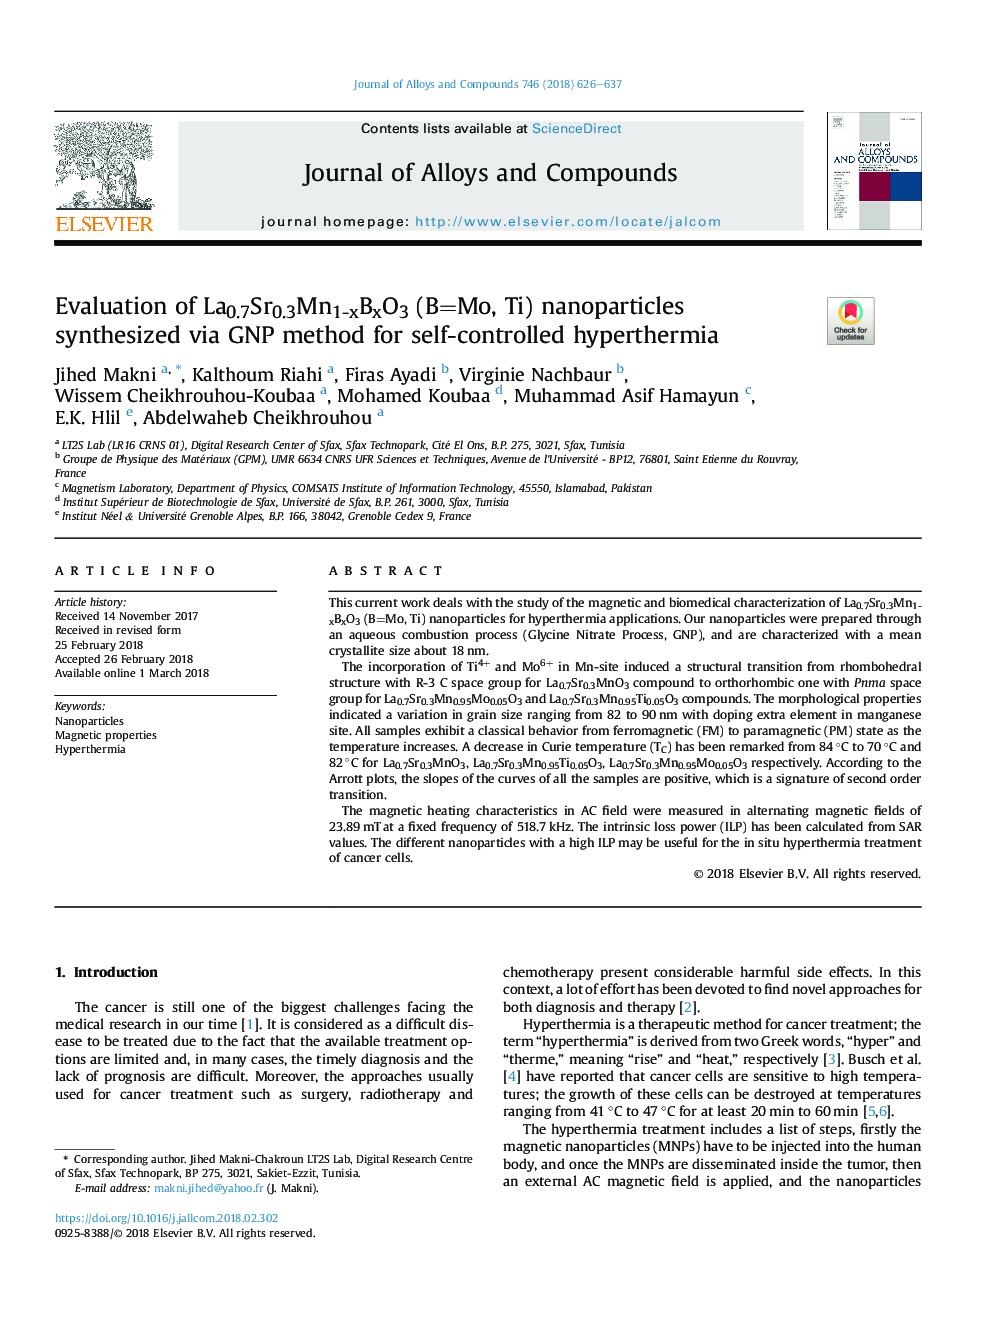 Evaluation of La0.7Sr0.3Mn1-xBxO3 (B=Mo, Ti) nanoparticles synthesized via GNP method for self-controlled hyperthermia